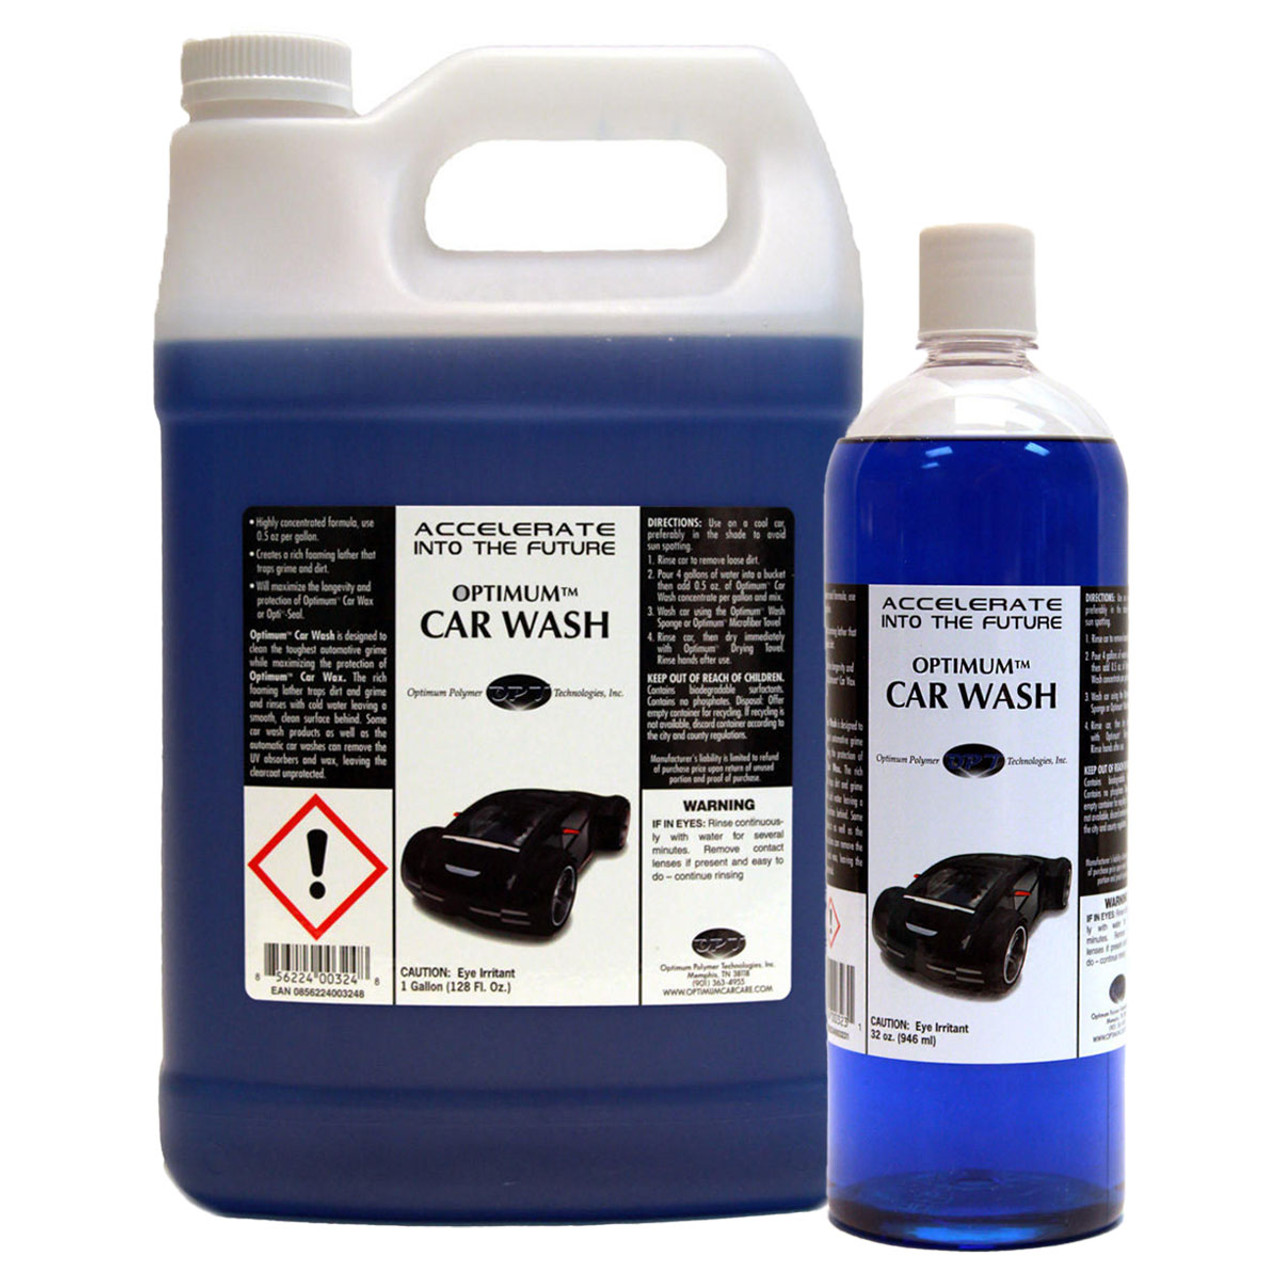 Level Finish Premium Spray Detailing Kit - Ceramic Coating, Waterless Car Wash & Plastic, Rubber, Vinyl, & Leather Restorer